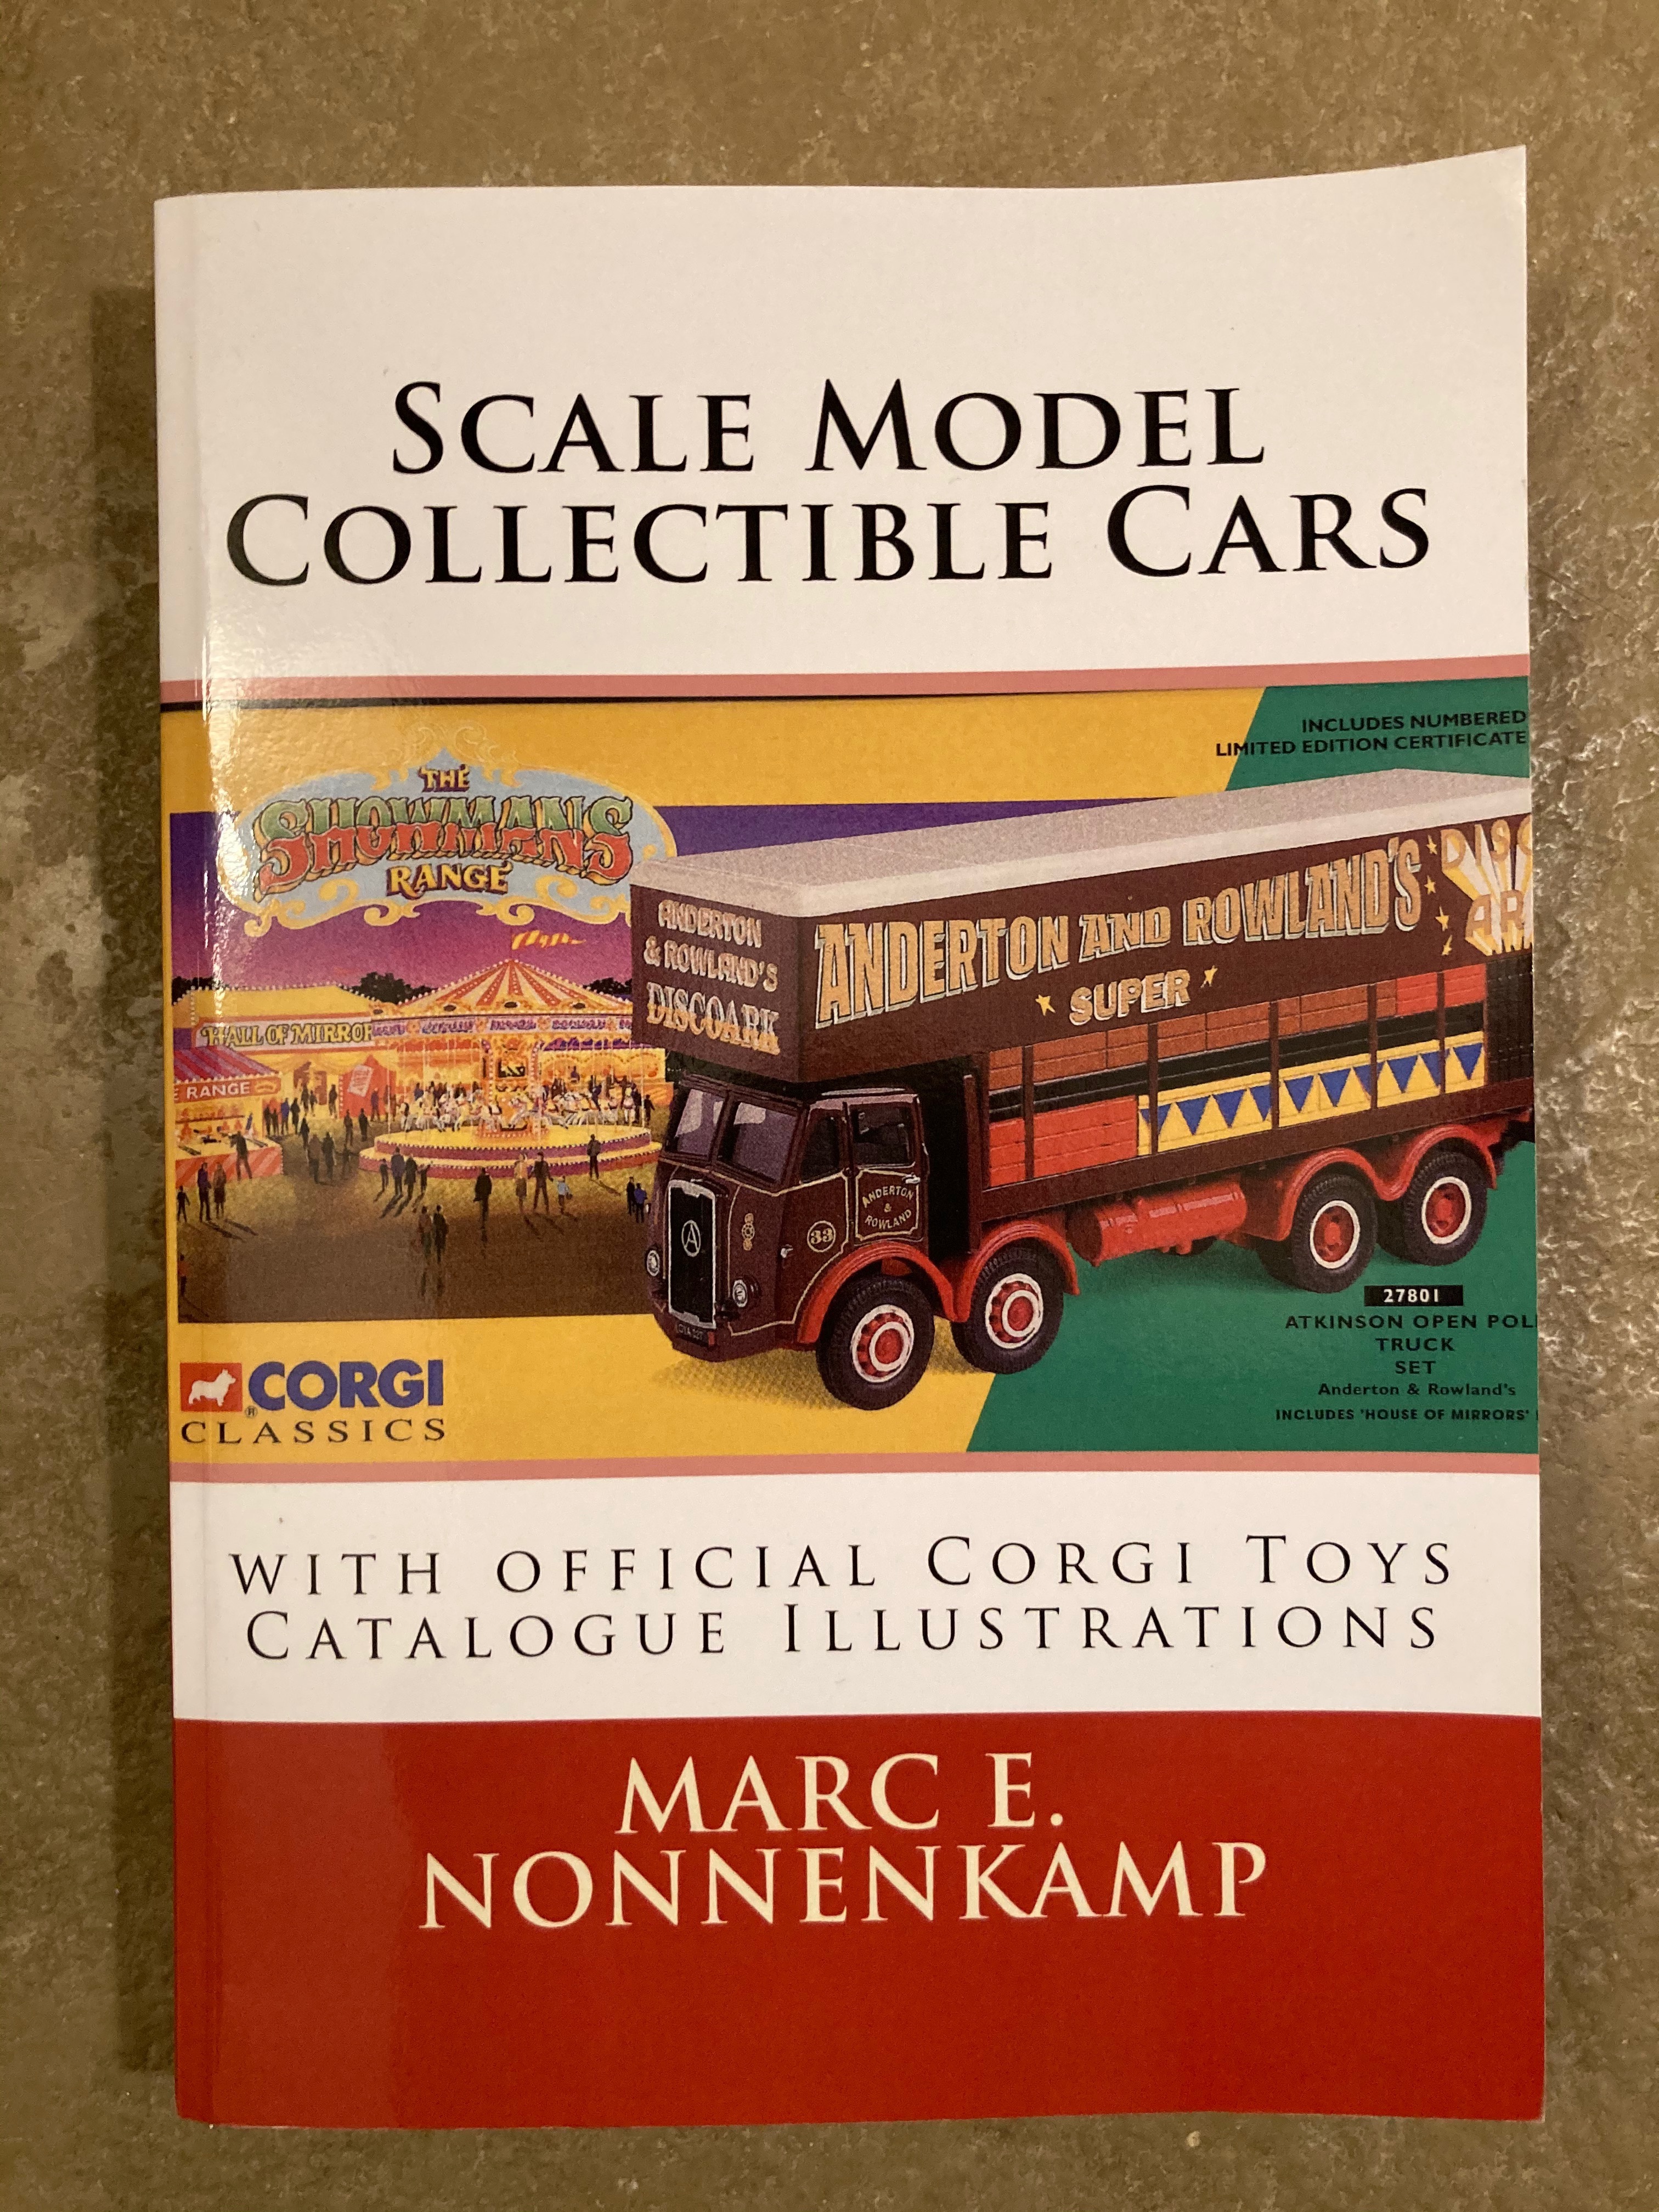 Scale Model Collectible Cars: with Selective Catalogue Histories for Matchbox, Corgi and Schuco - Nonnenkamp, Mr. Marc E.